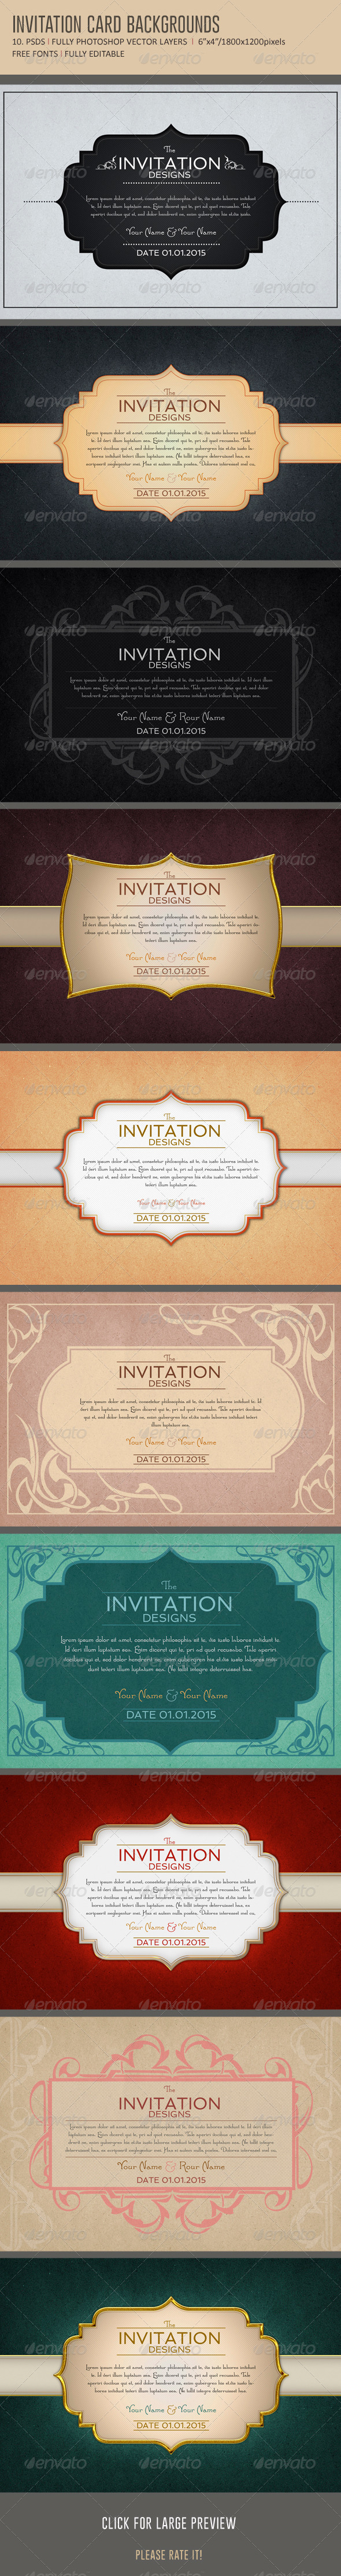 Invitation Card Backgrounds by creativeartx | GraphicRiver